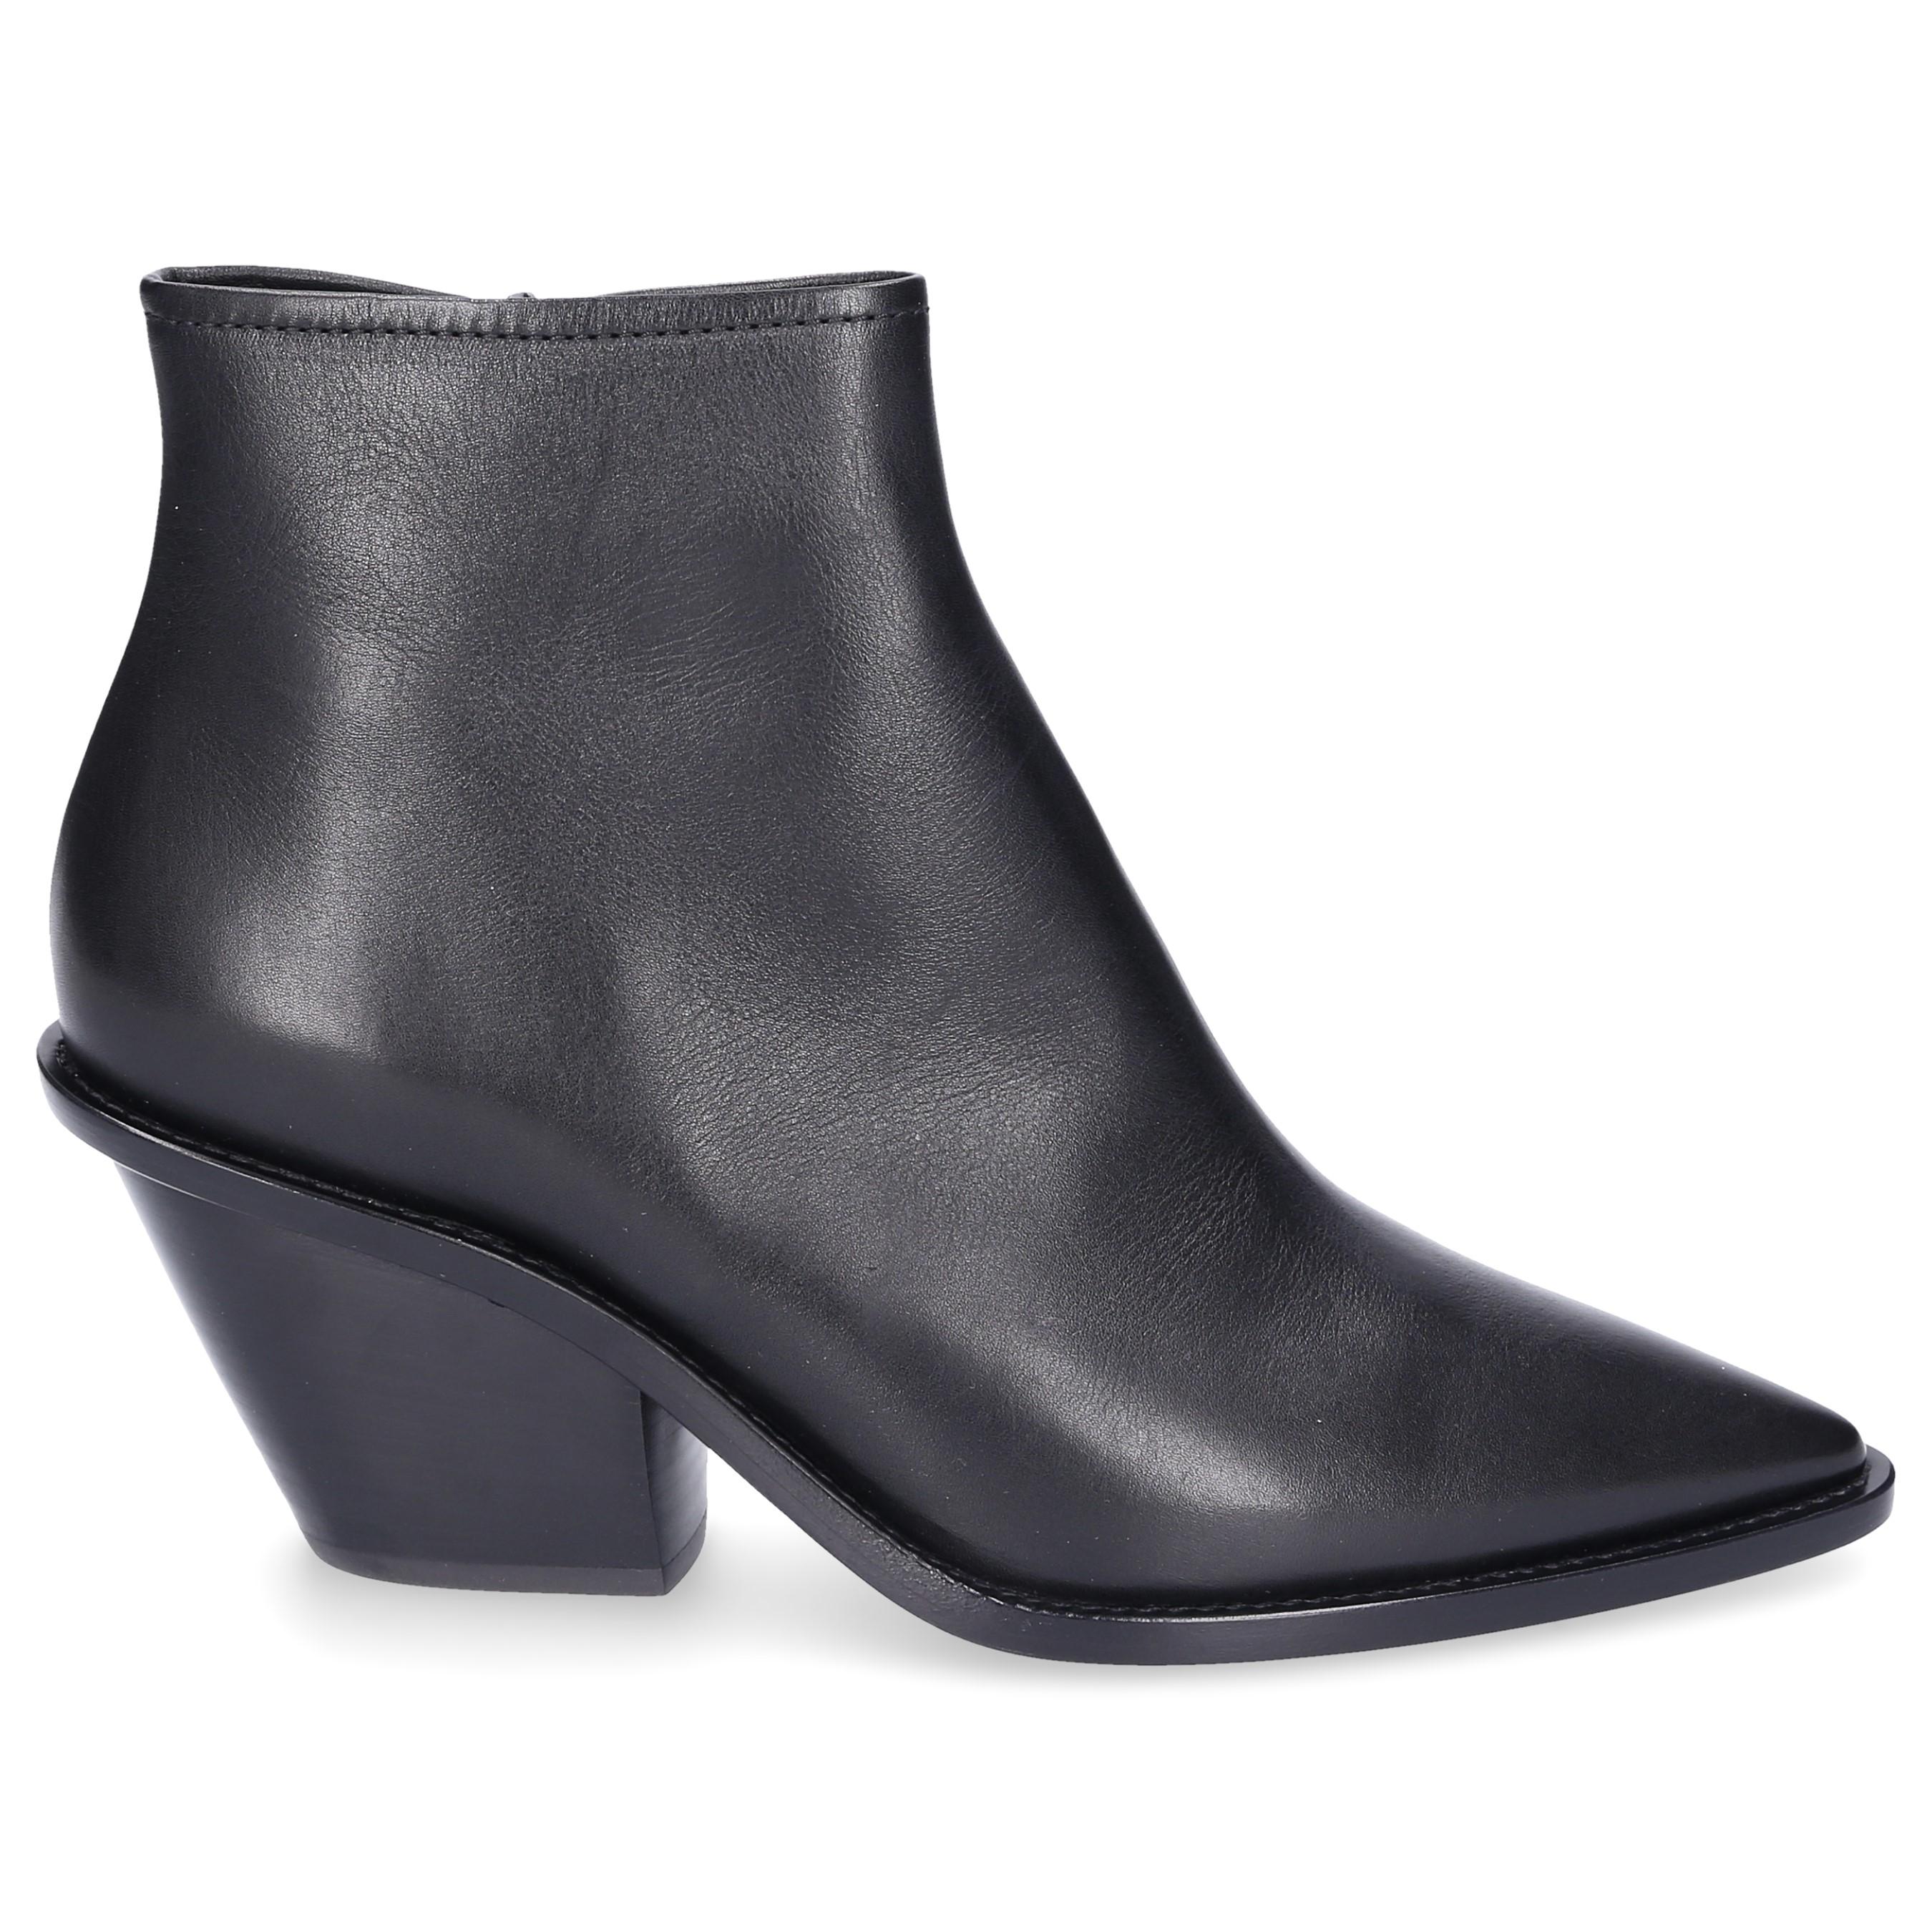 Agl Attilio Giusti Leombruni Leather Ankle Boots Black D239508 - Lyst